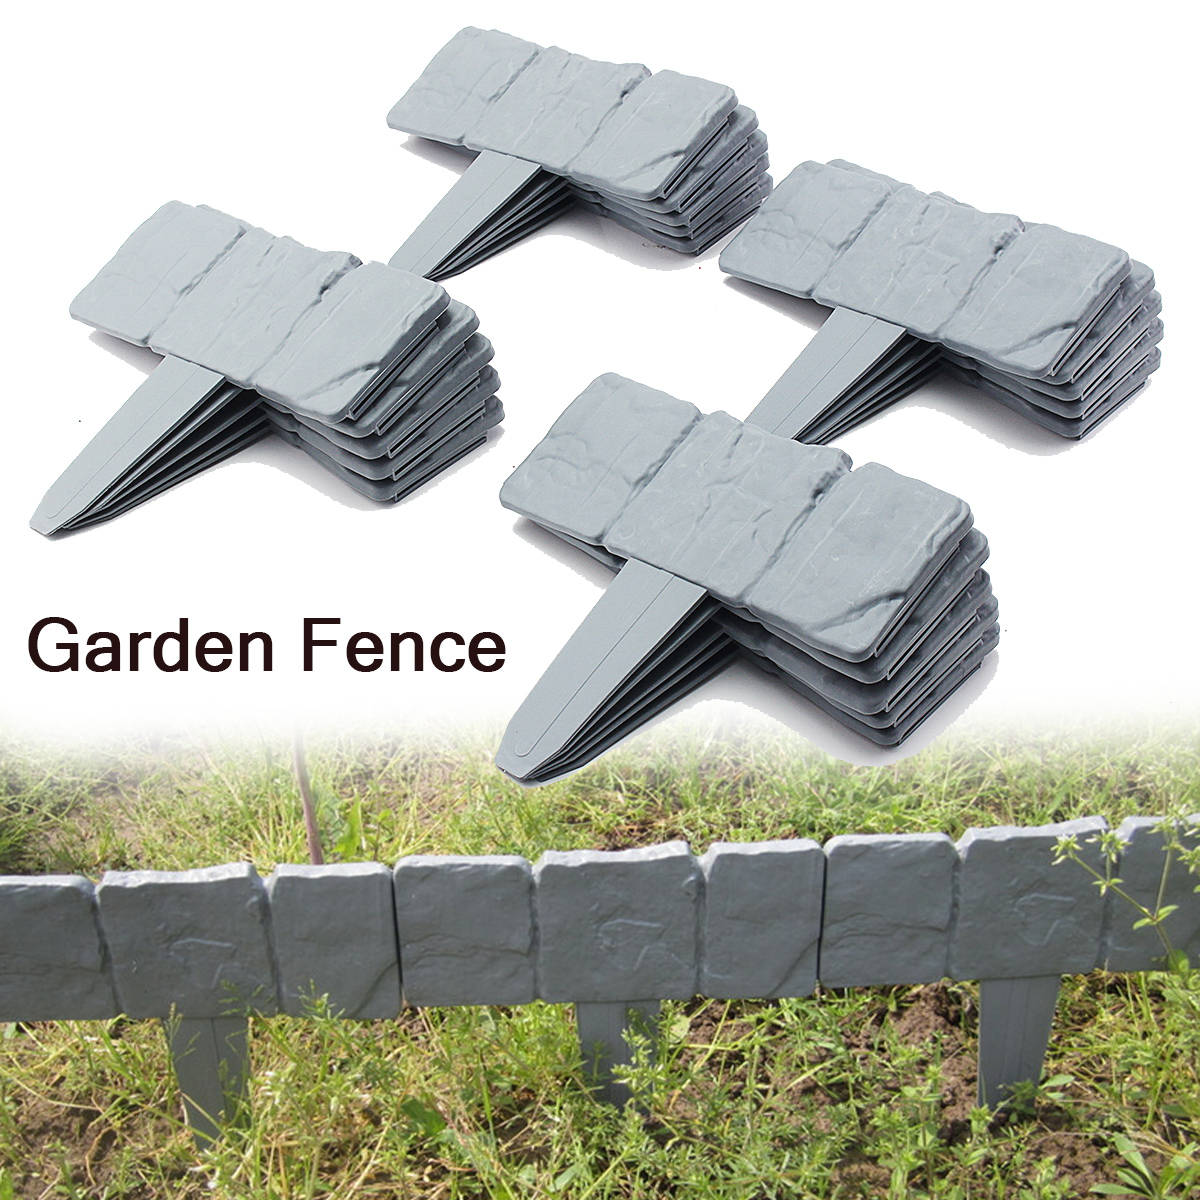 20Pcs Garden Fence Edging Cobbled Stone Effect Plastic Lawn Edging Plant Border Decorations